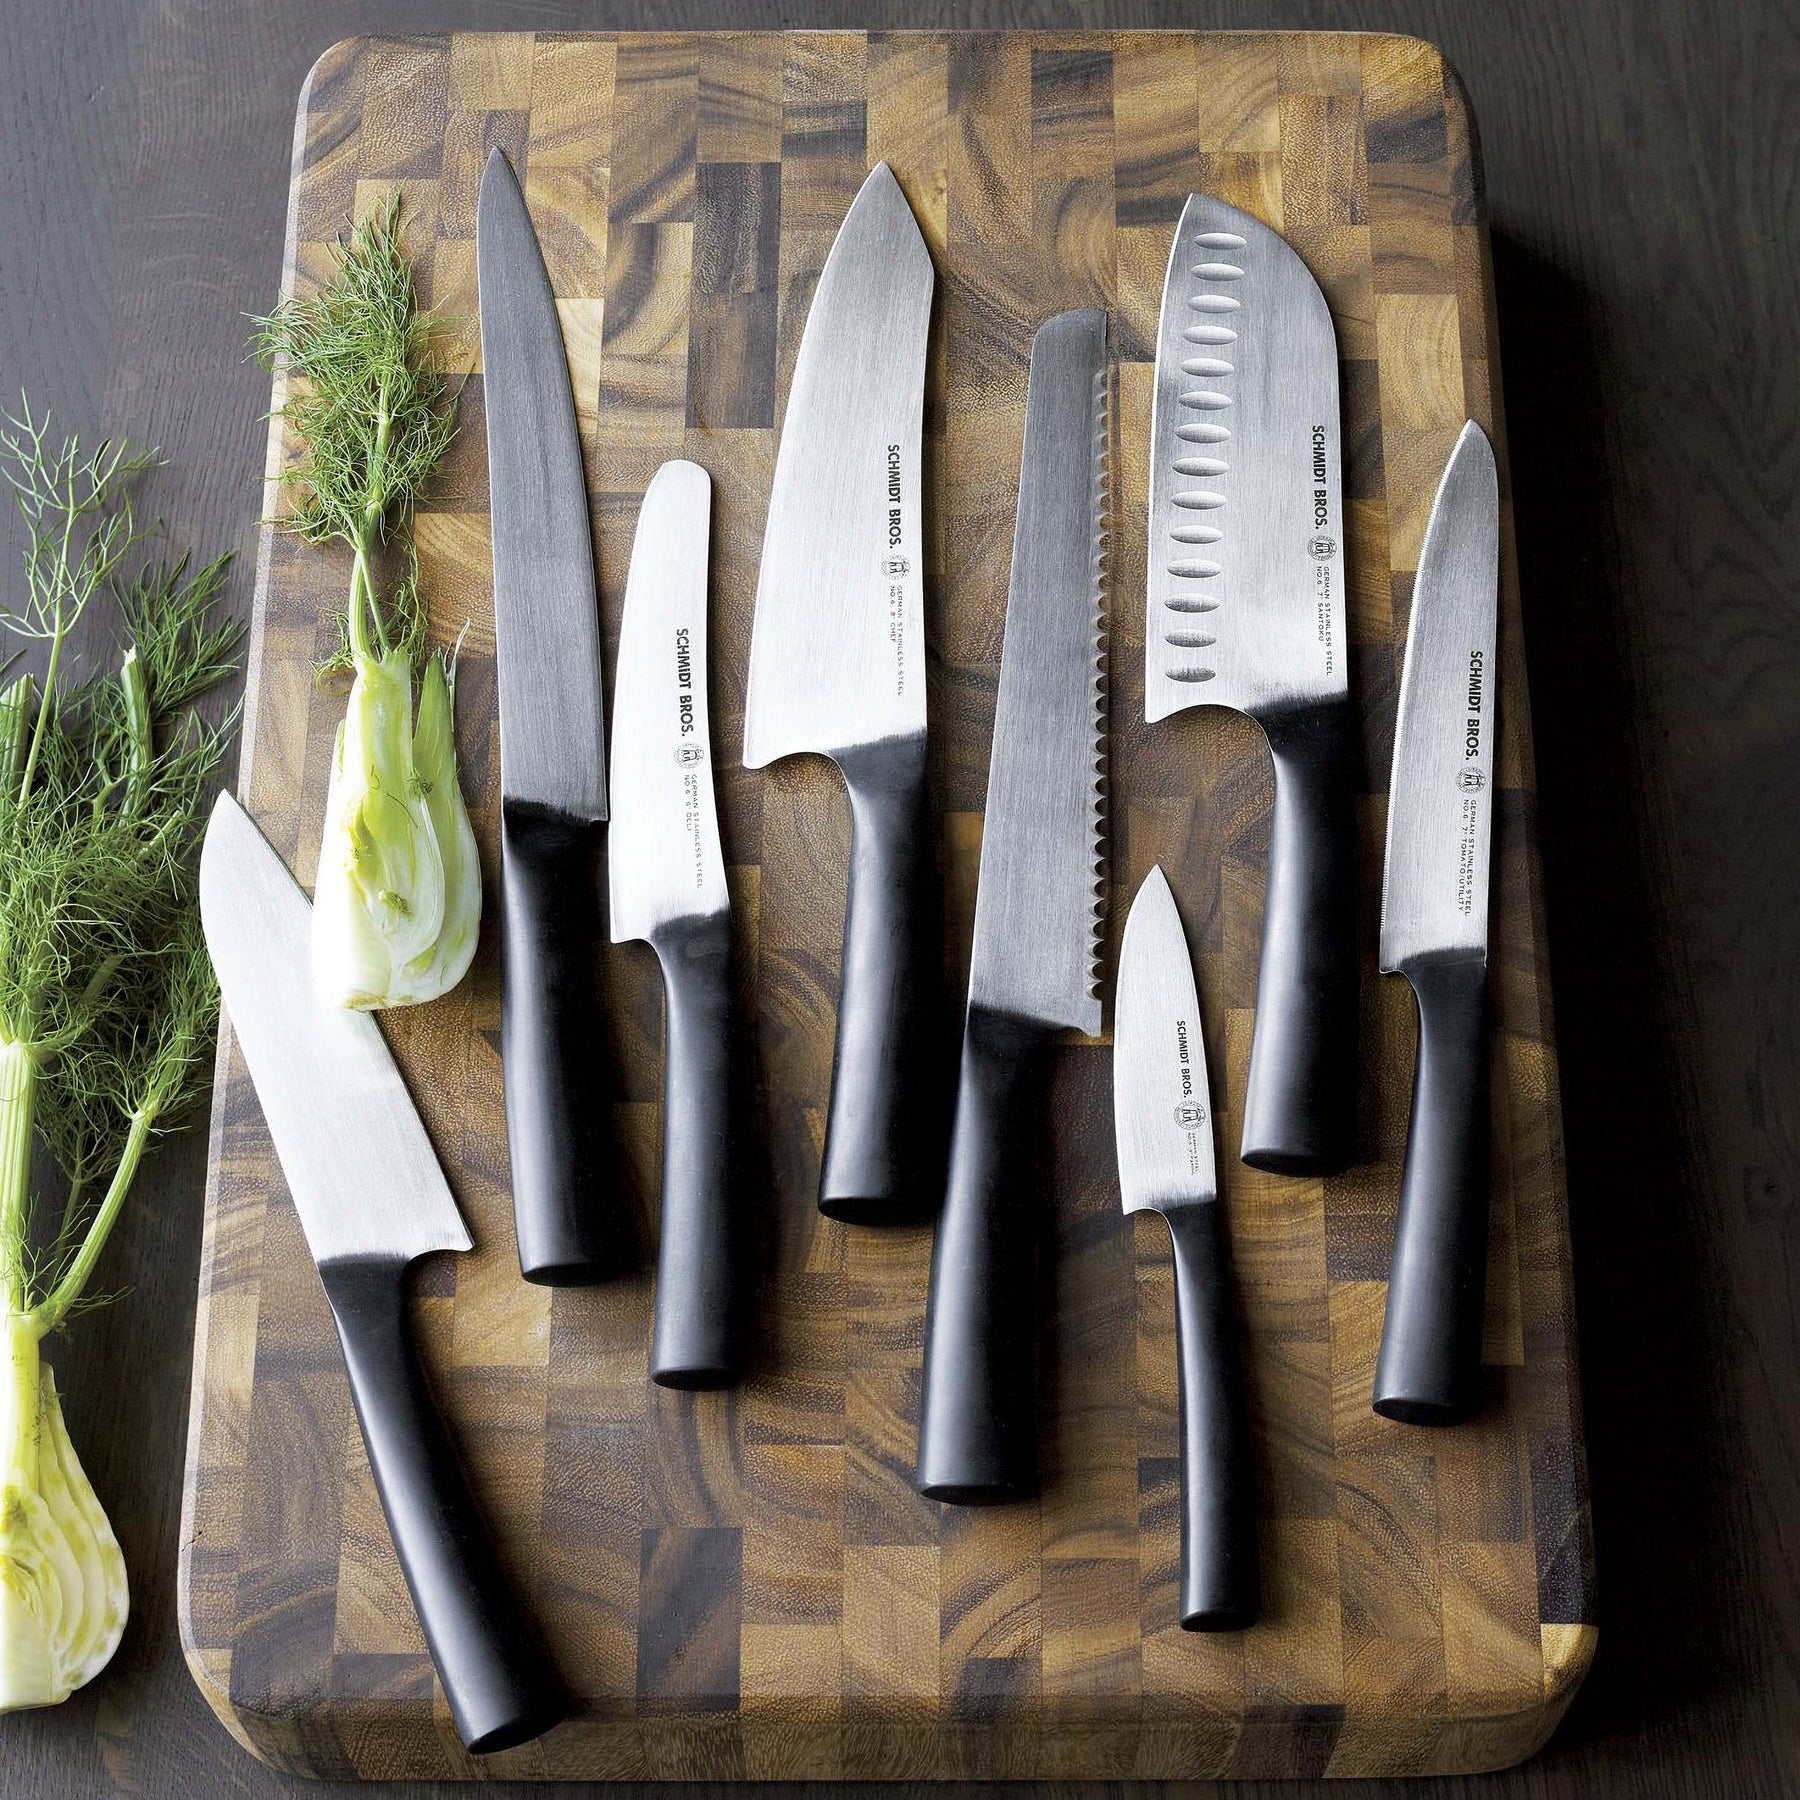 6-Piece Steak Knife Set — Messerstahl 2.0 – Knives that look sharp too.